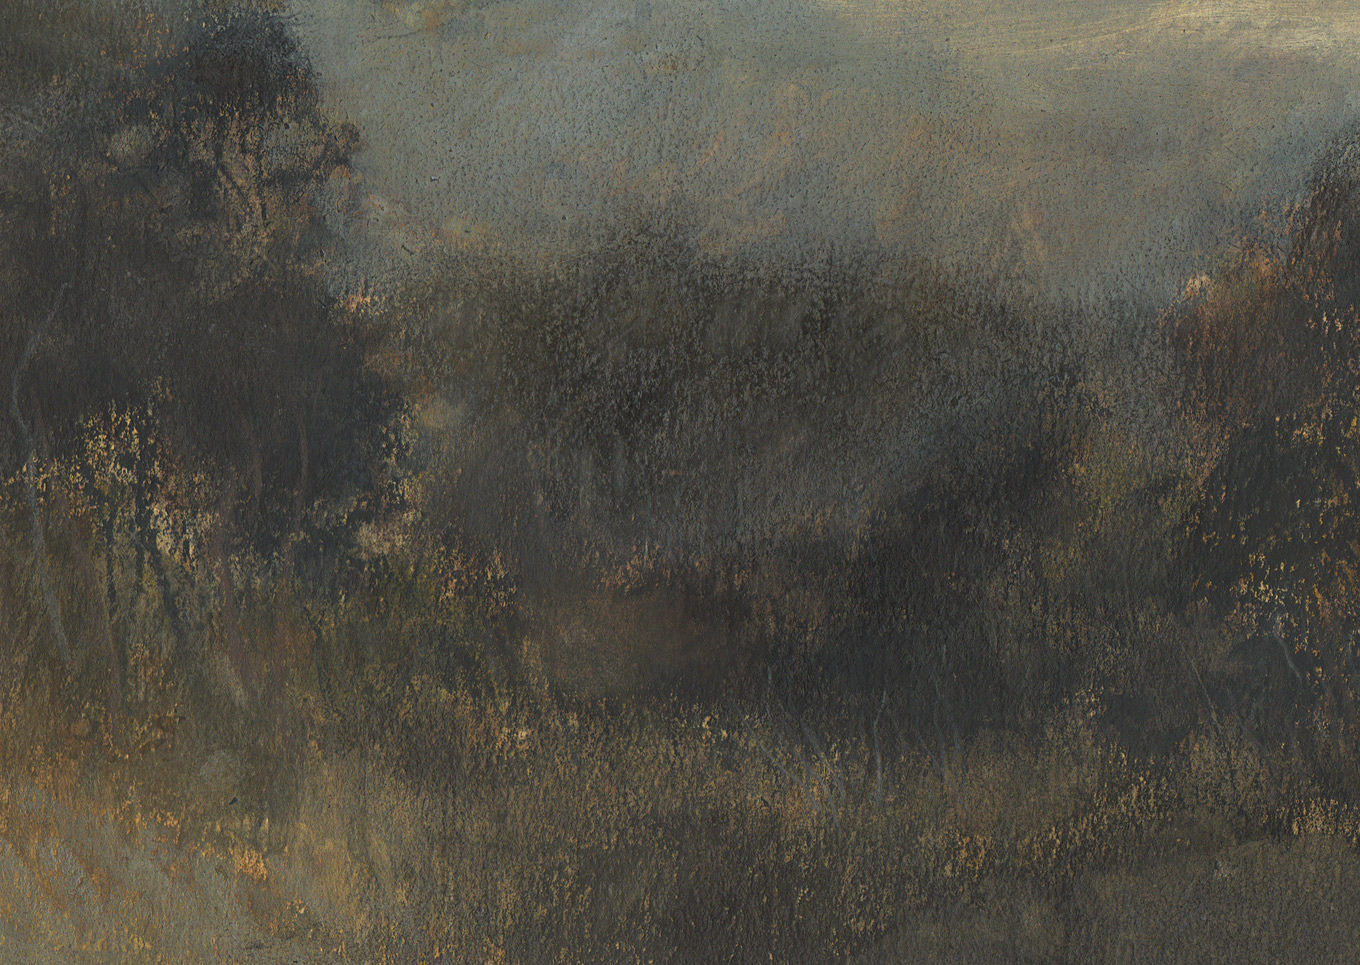 Nicholas Herbert, British Artist - Landscape L950, Sharpenhoe Series, Clearing Below Sharpenhoe, The Chiltern Hills, contemporary mixed media painting